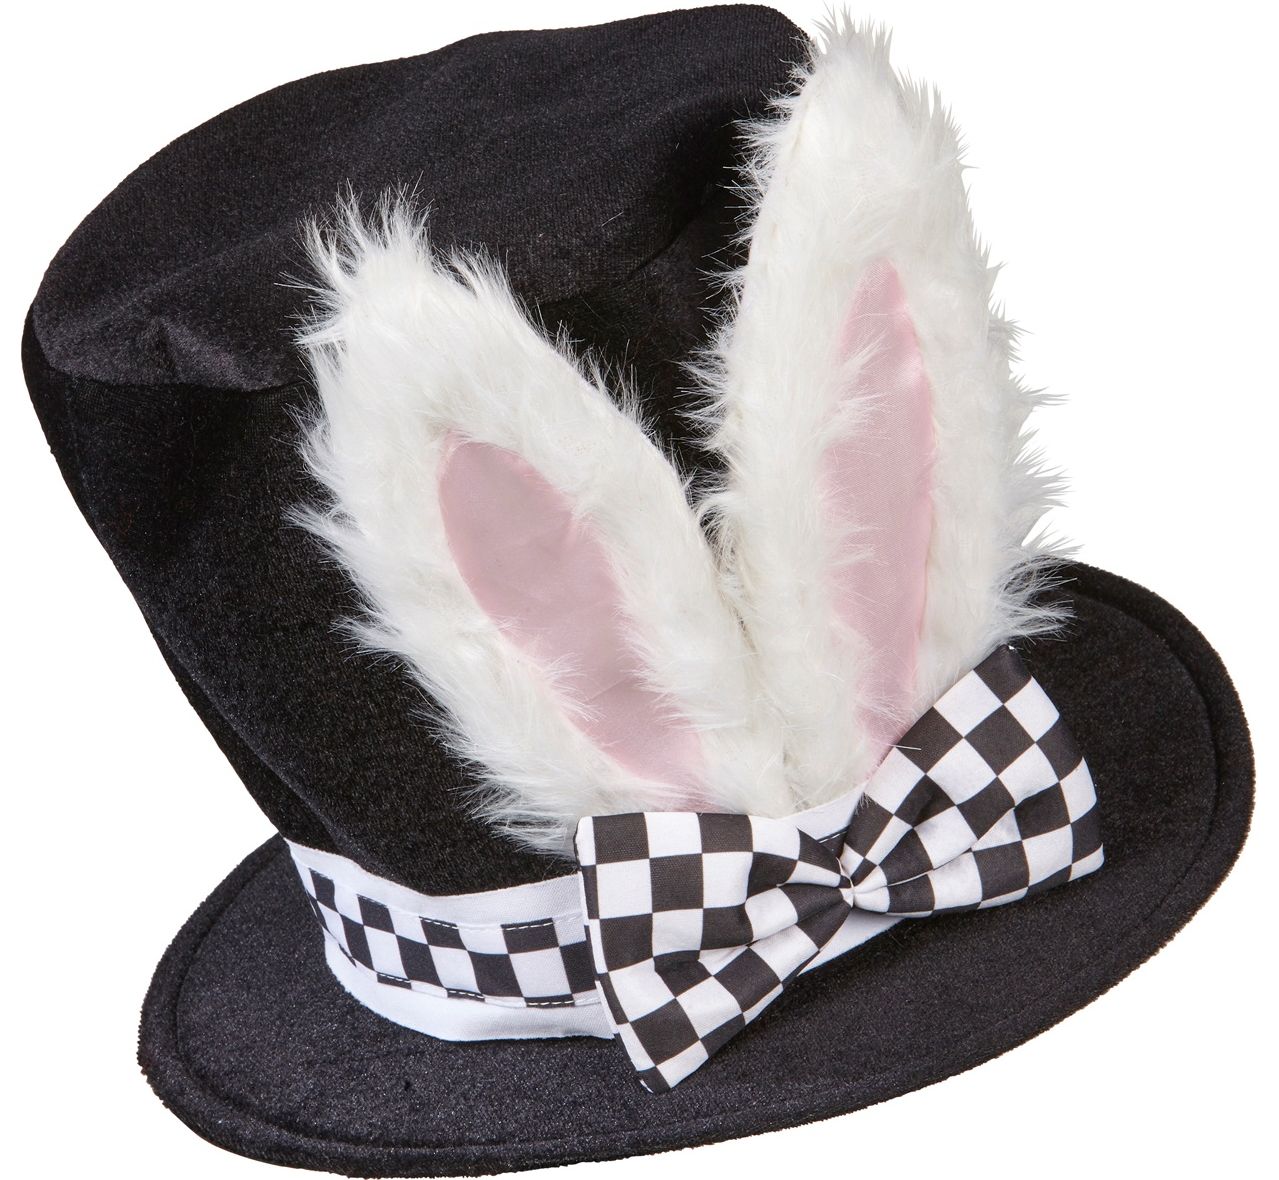 Mad hatter hoed met konijnenoren